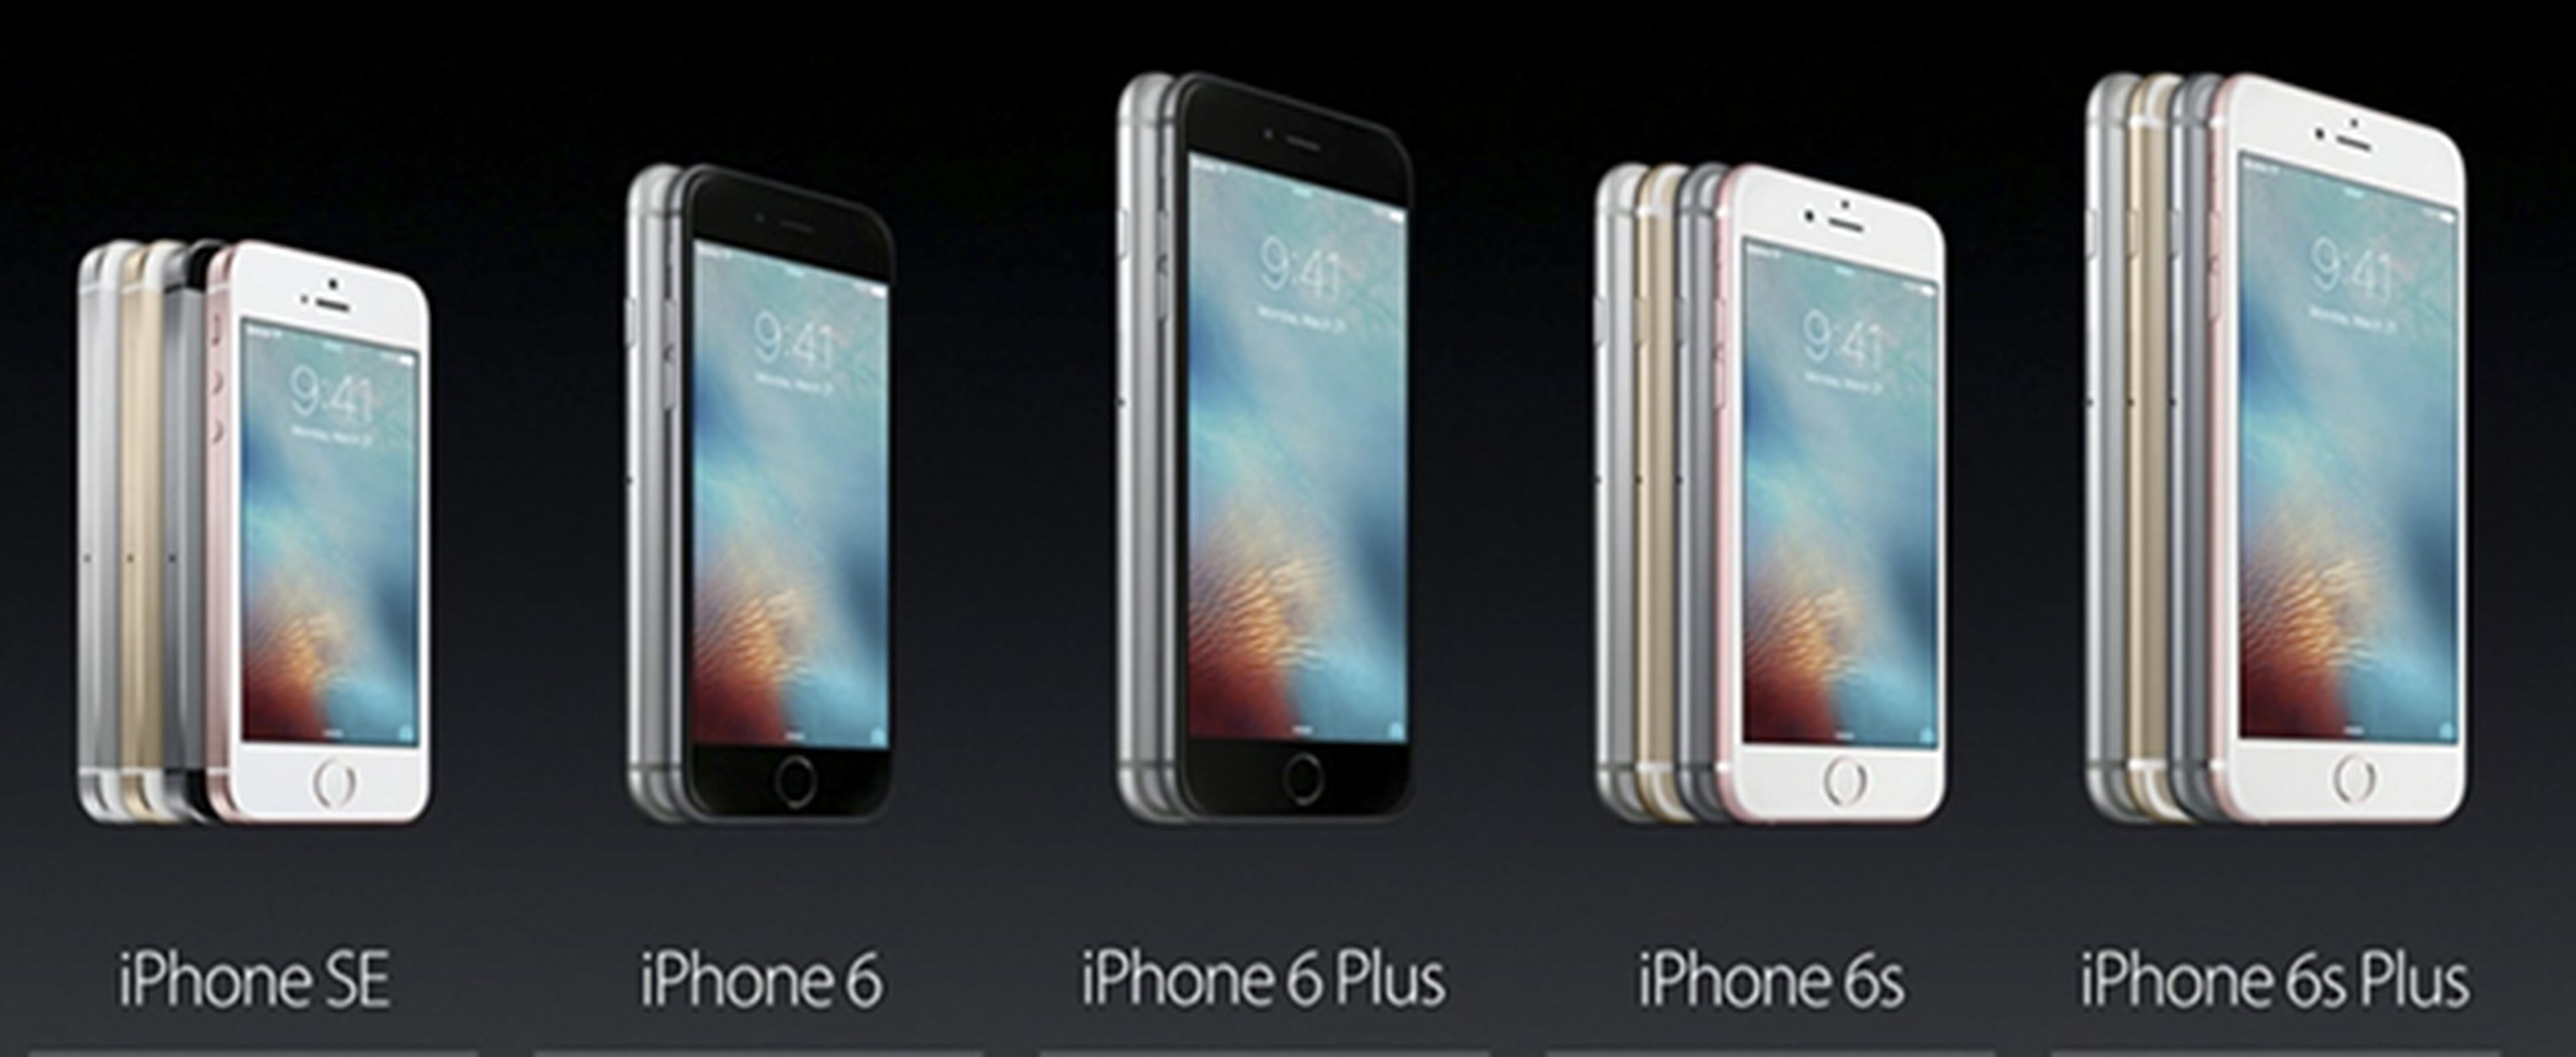 Comparativas entre iPhone SE, iPhone 6S y iPhone 5S